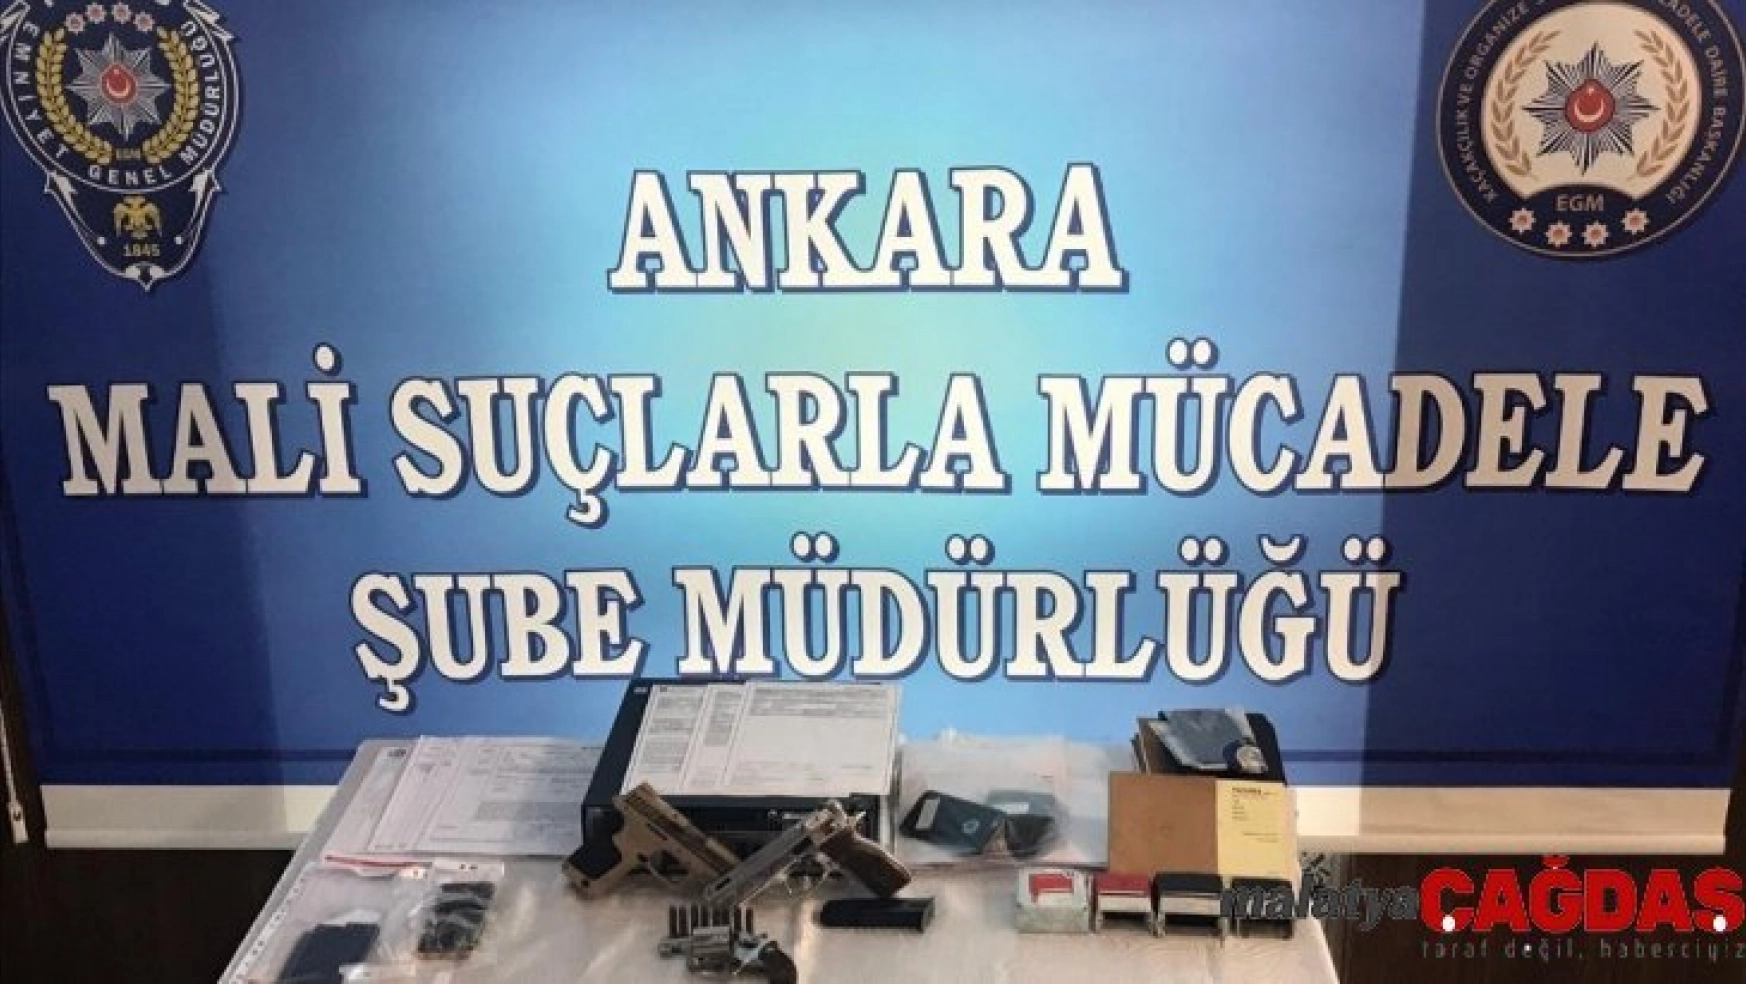 Ankara'da hastanede sahte engelli raporu skandalına 95 gözaltı